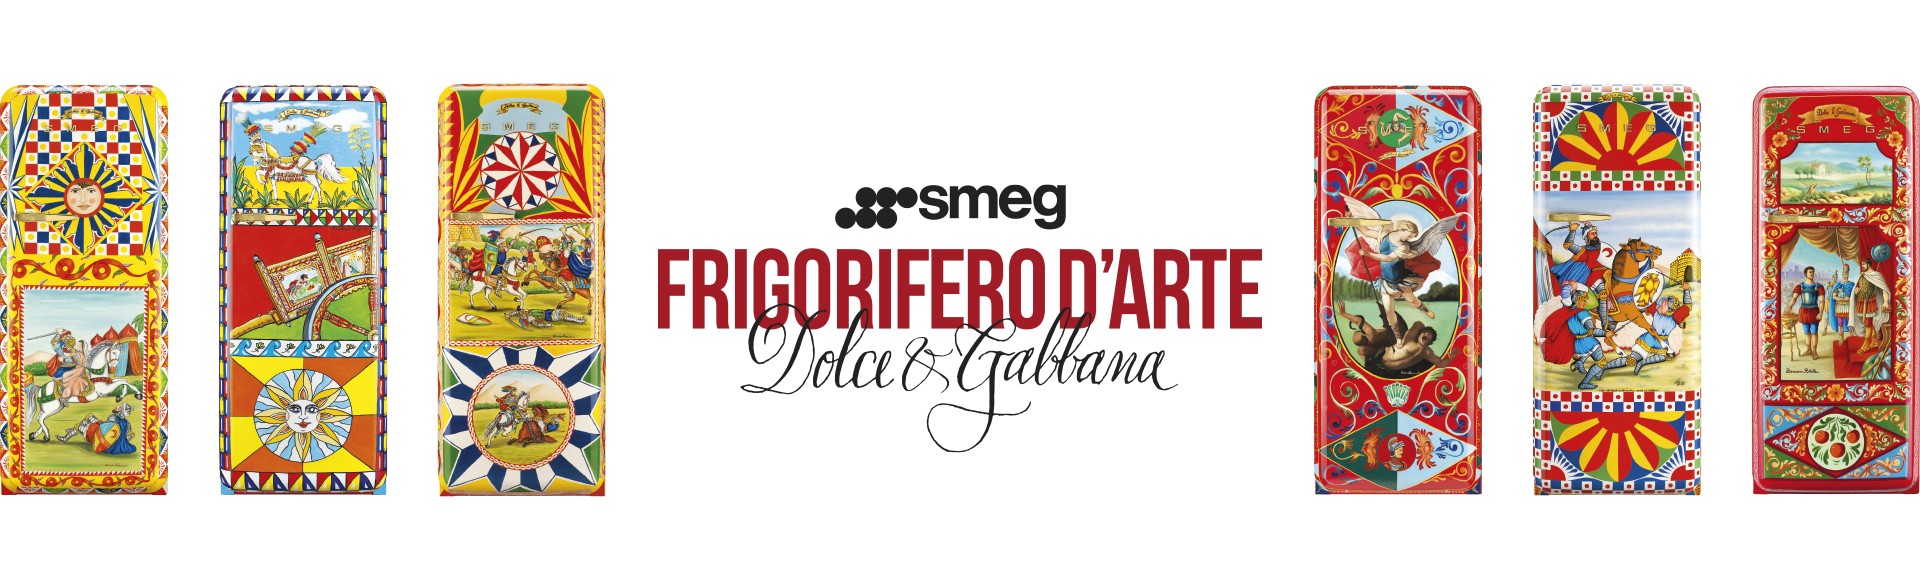 Refrigerator of Art Smeg and Dolce&Gabbana - projects - Refrigerator